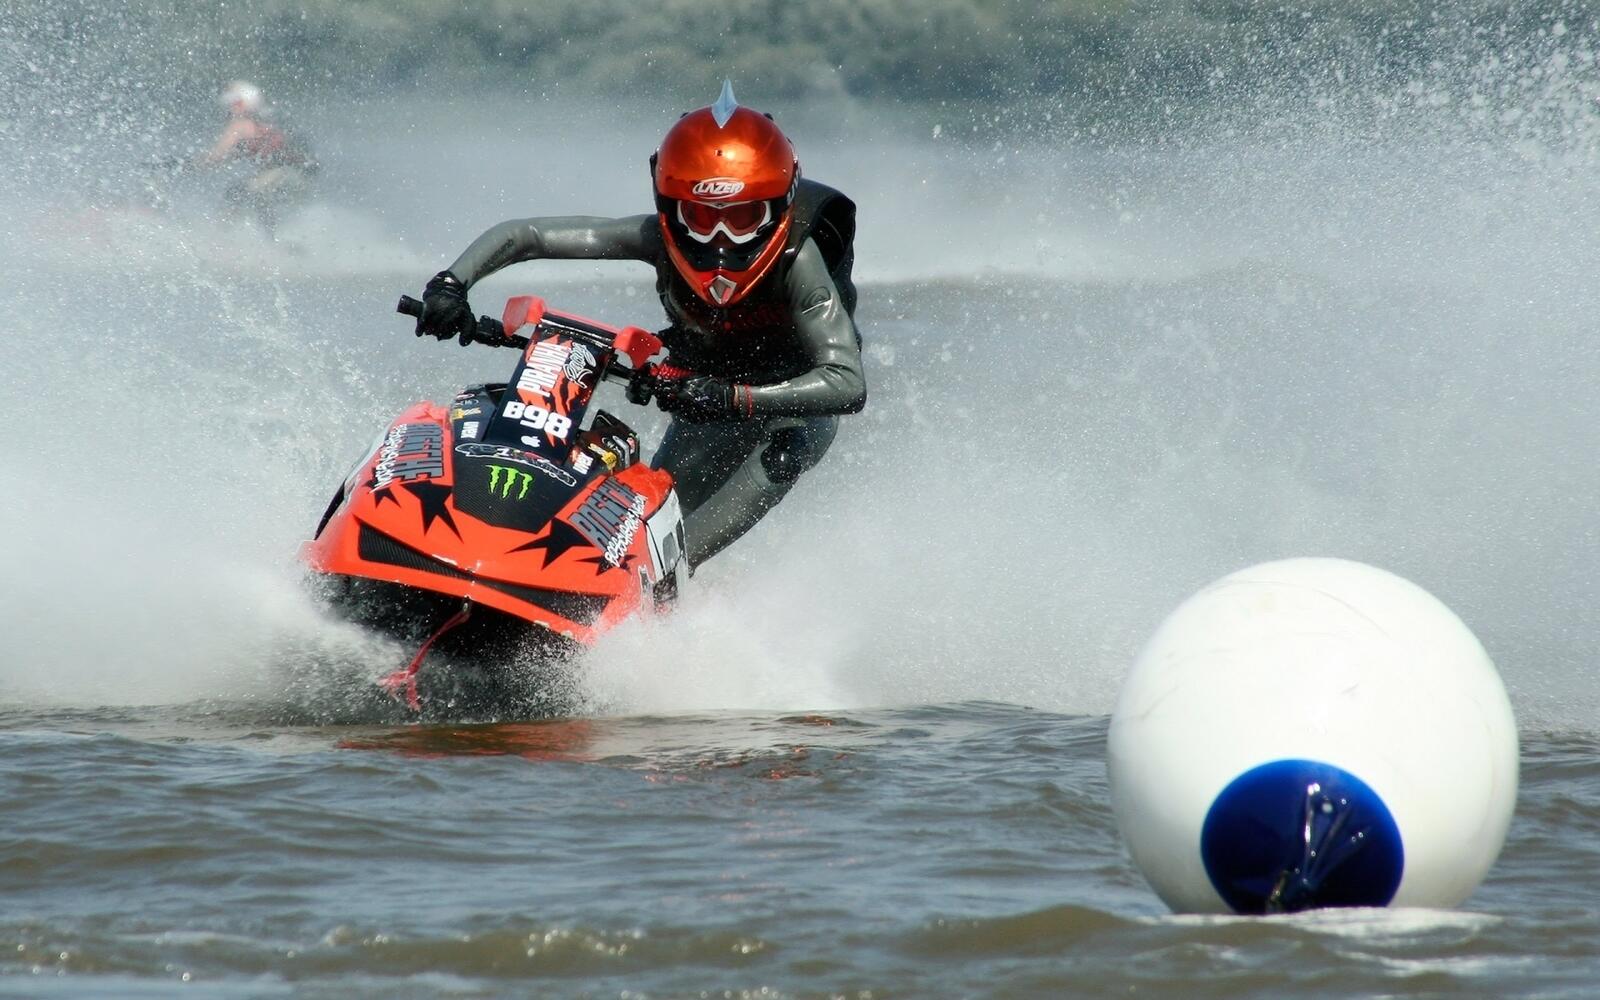 Wallpapers sport water motorcycle on the desktop